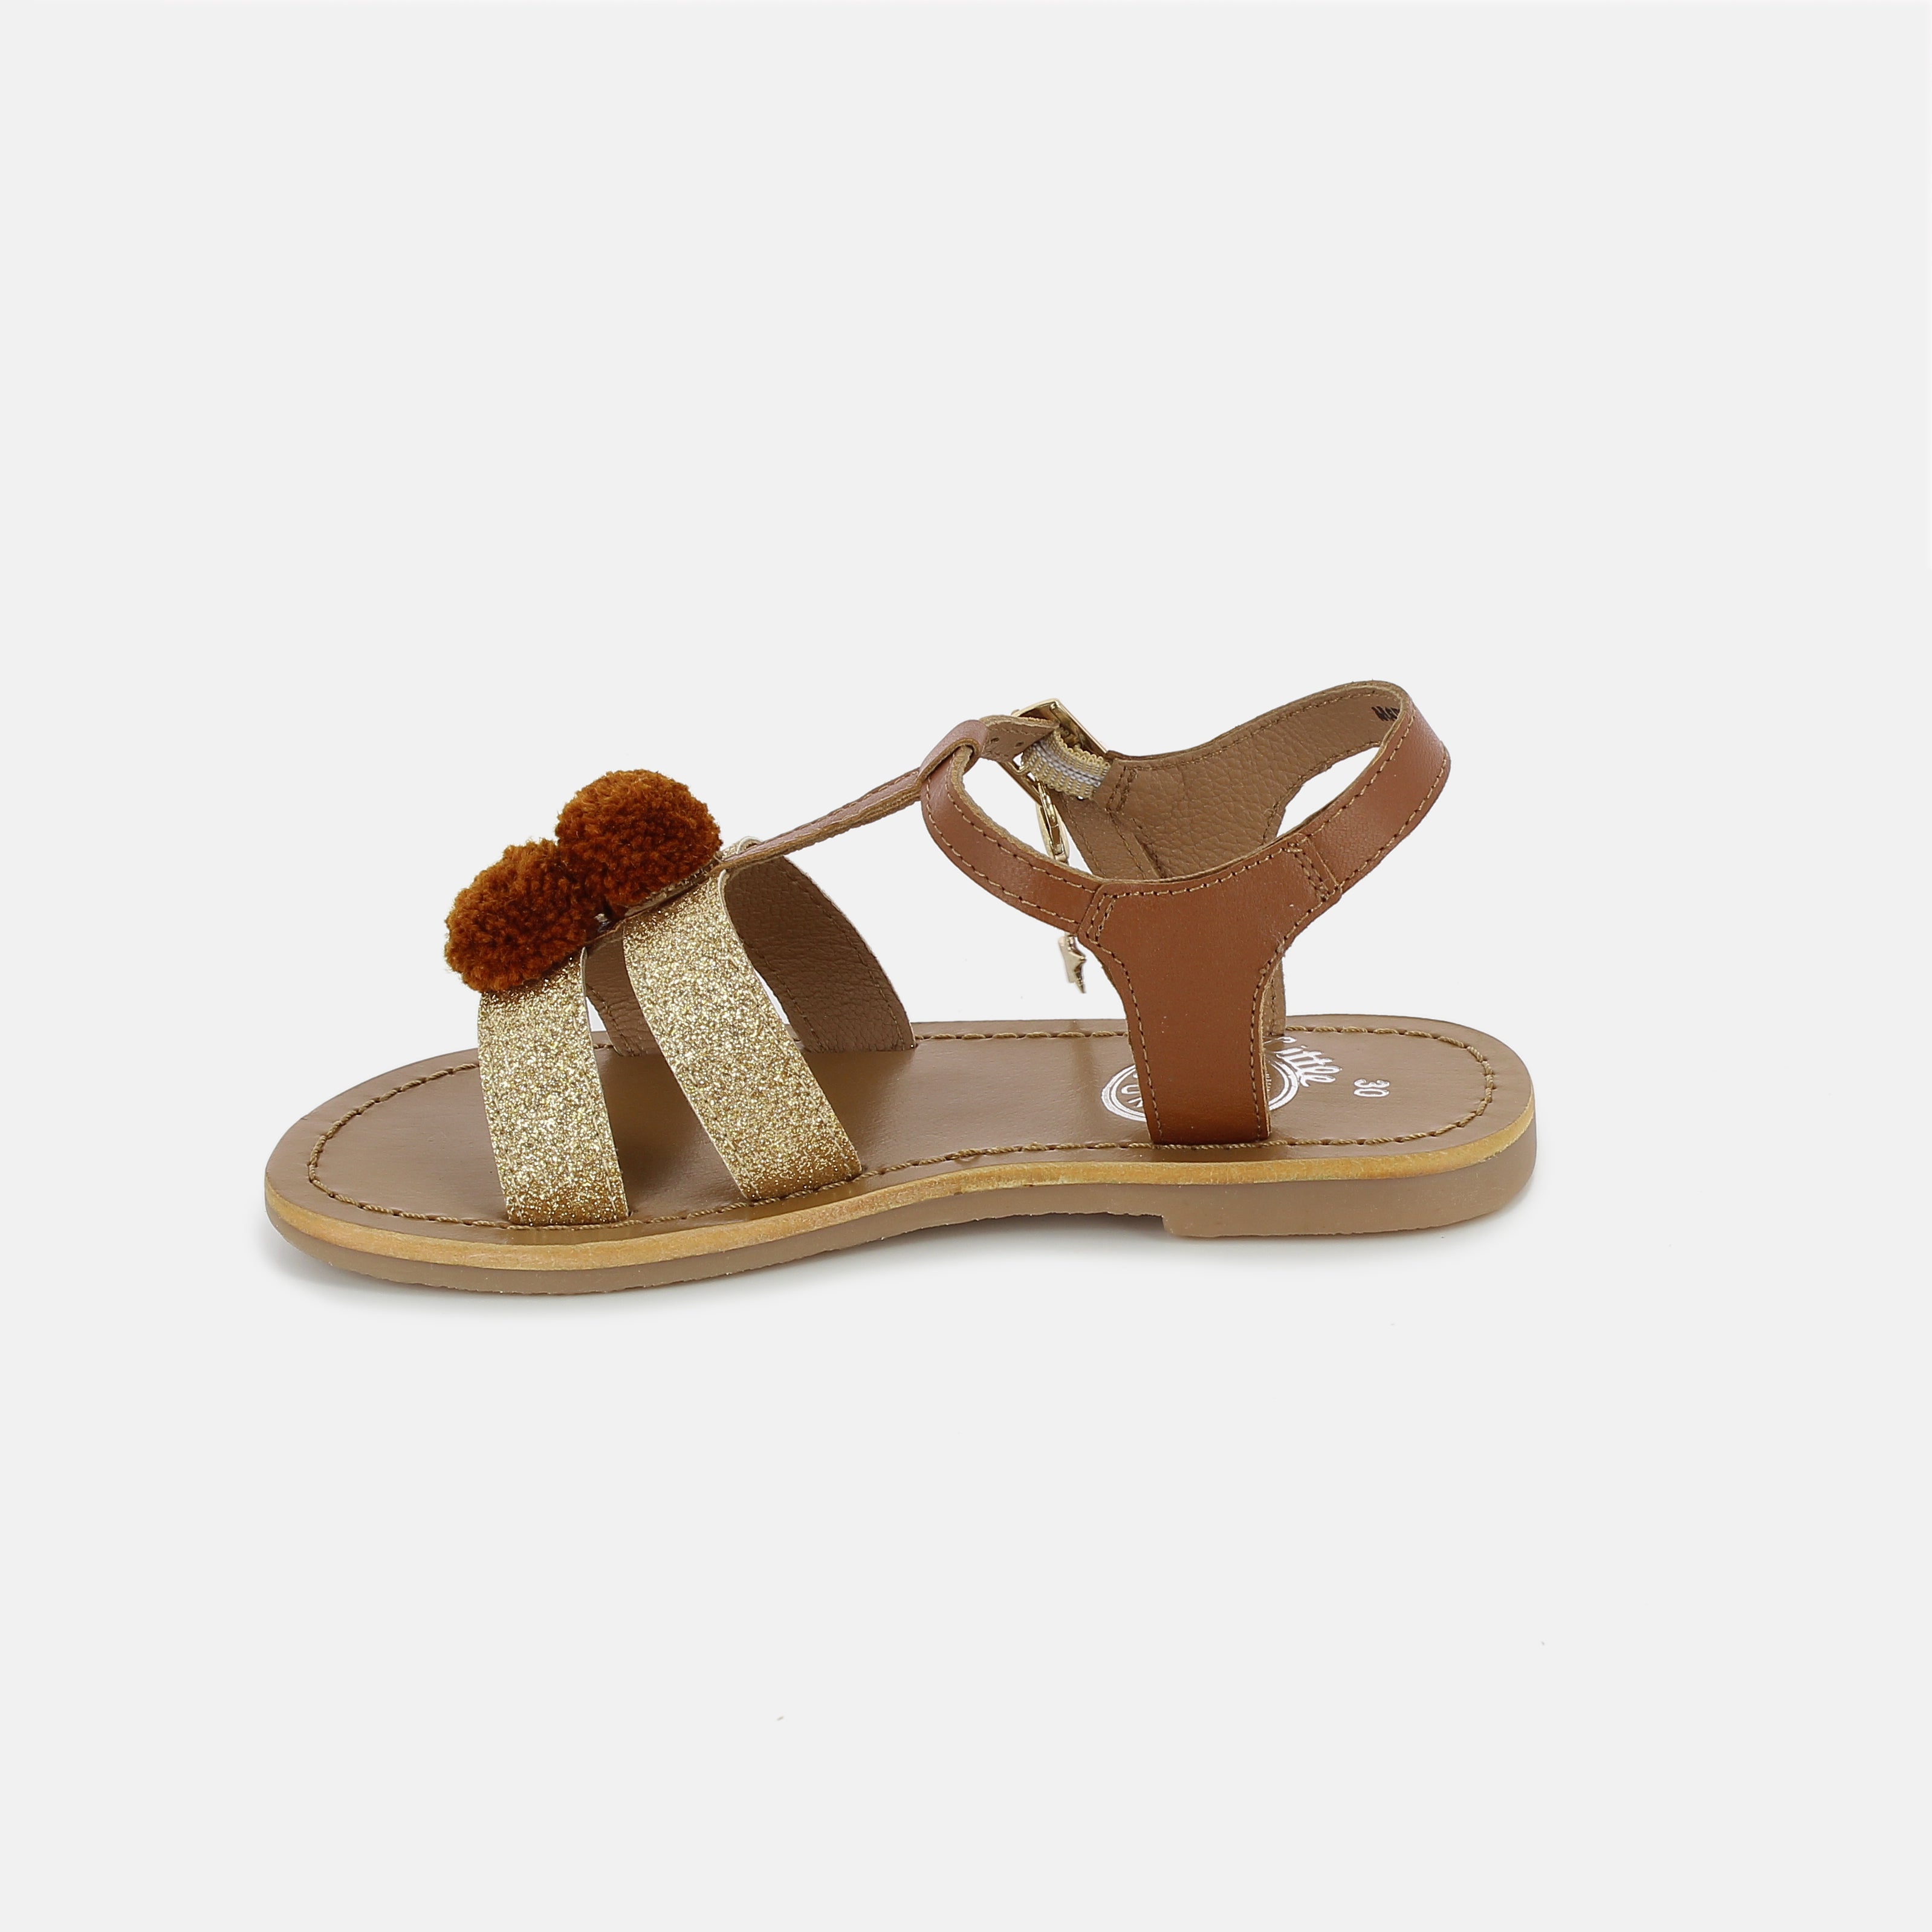 Girls Camel & Gold Leather Sandals